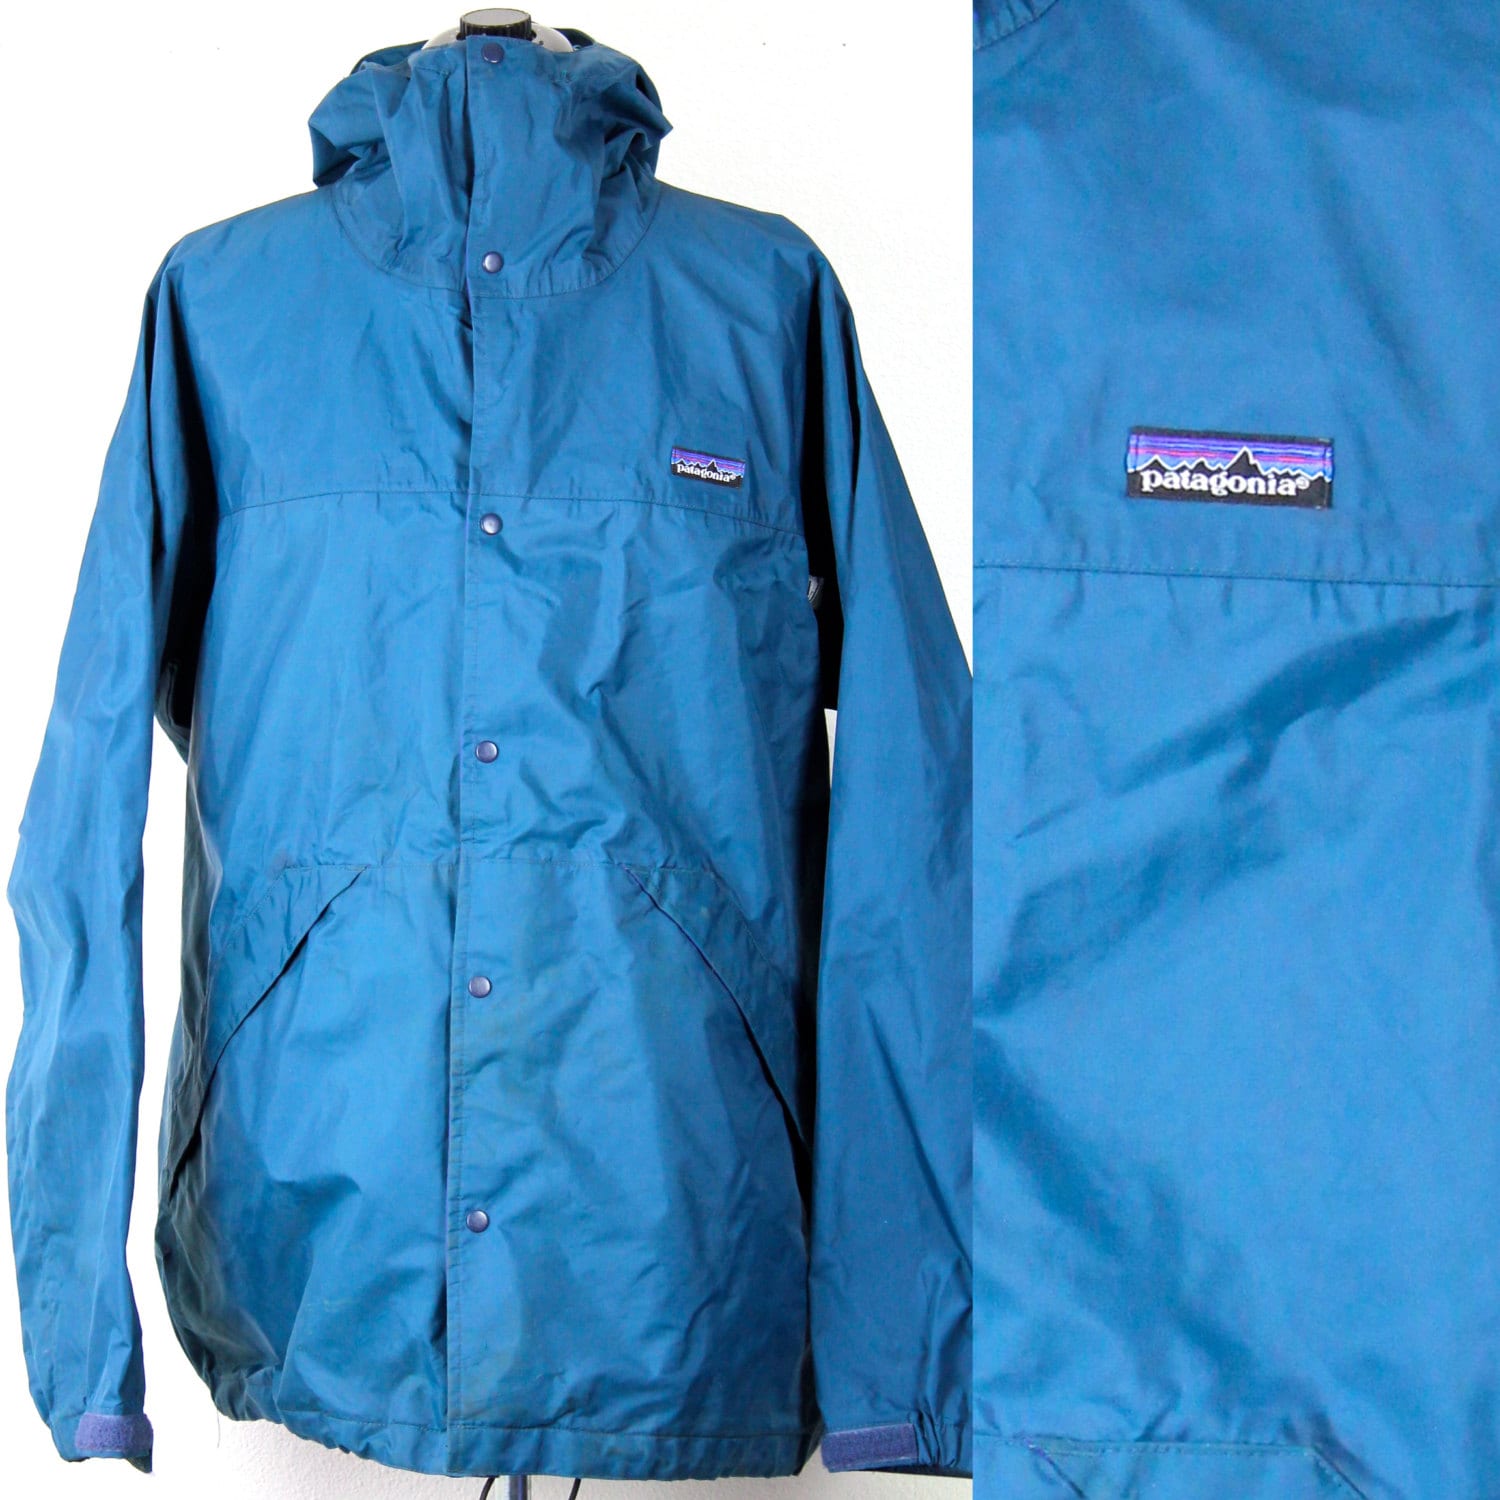 Vintage Retro Blue Patagonia Rain Jacket Large by VintageWestCoast